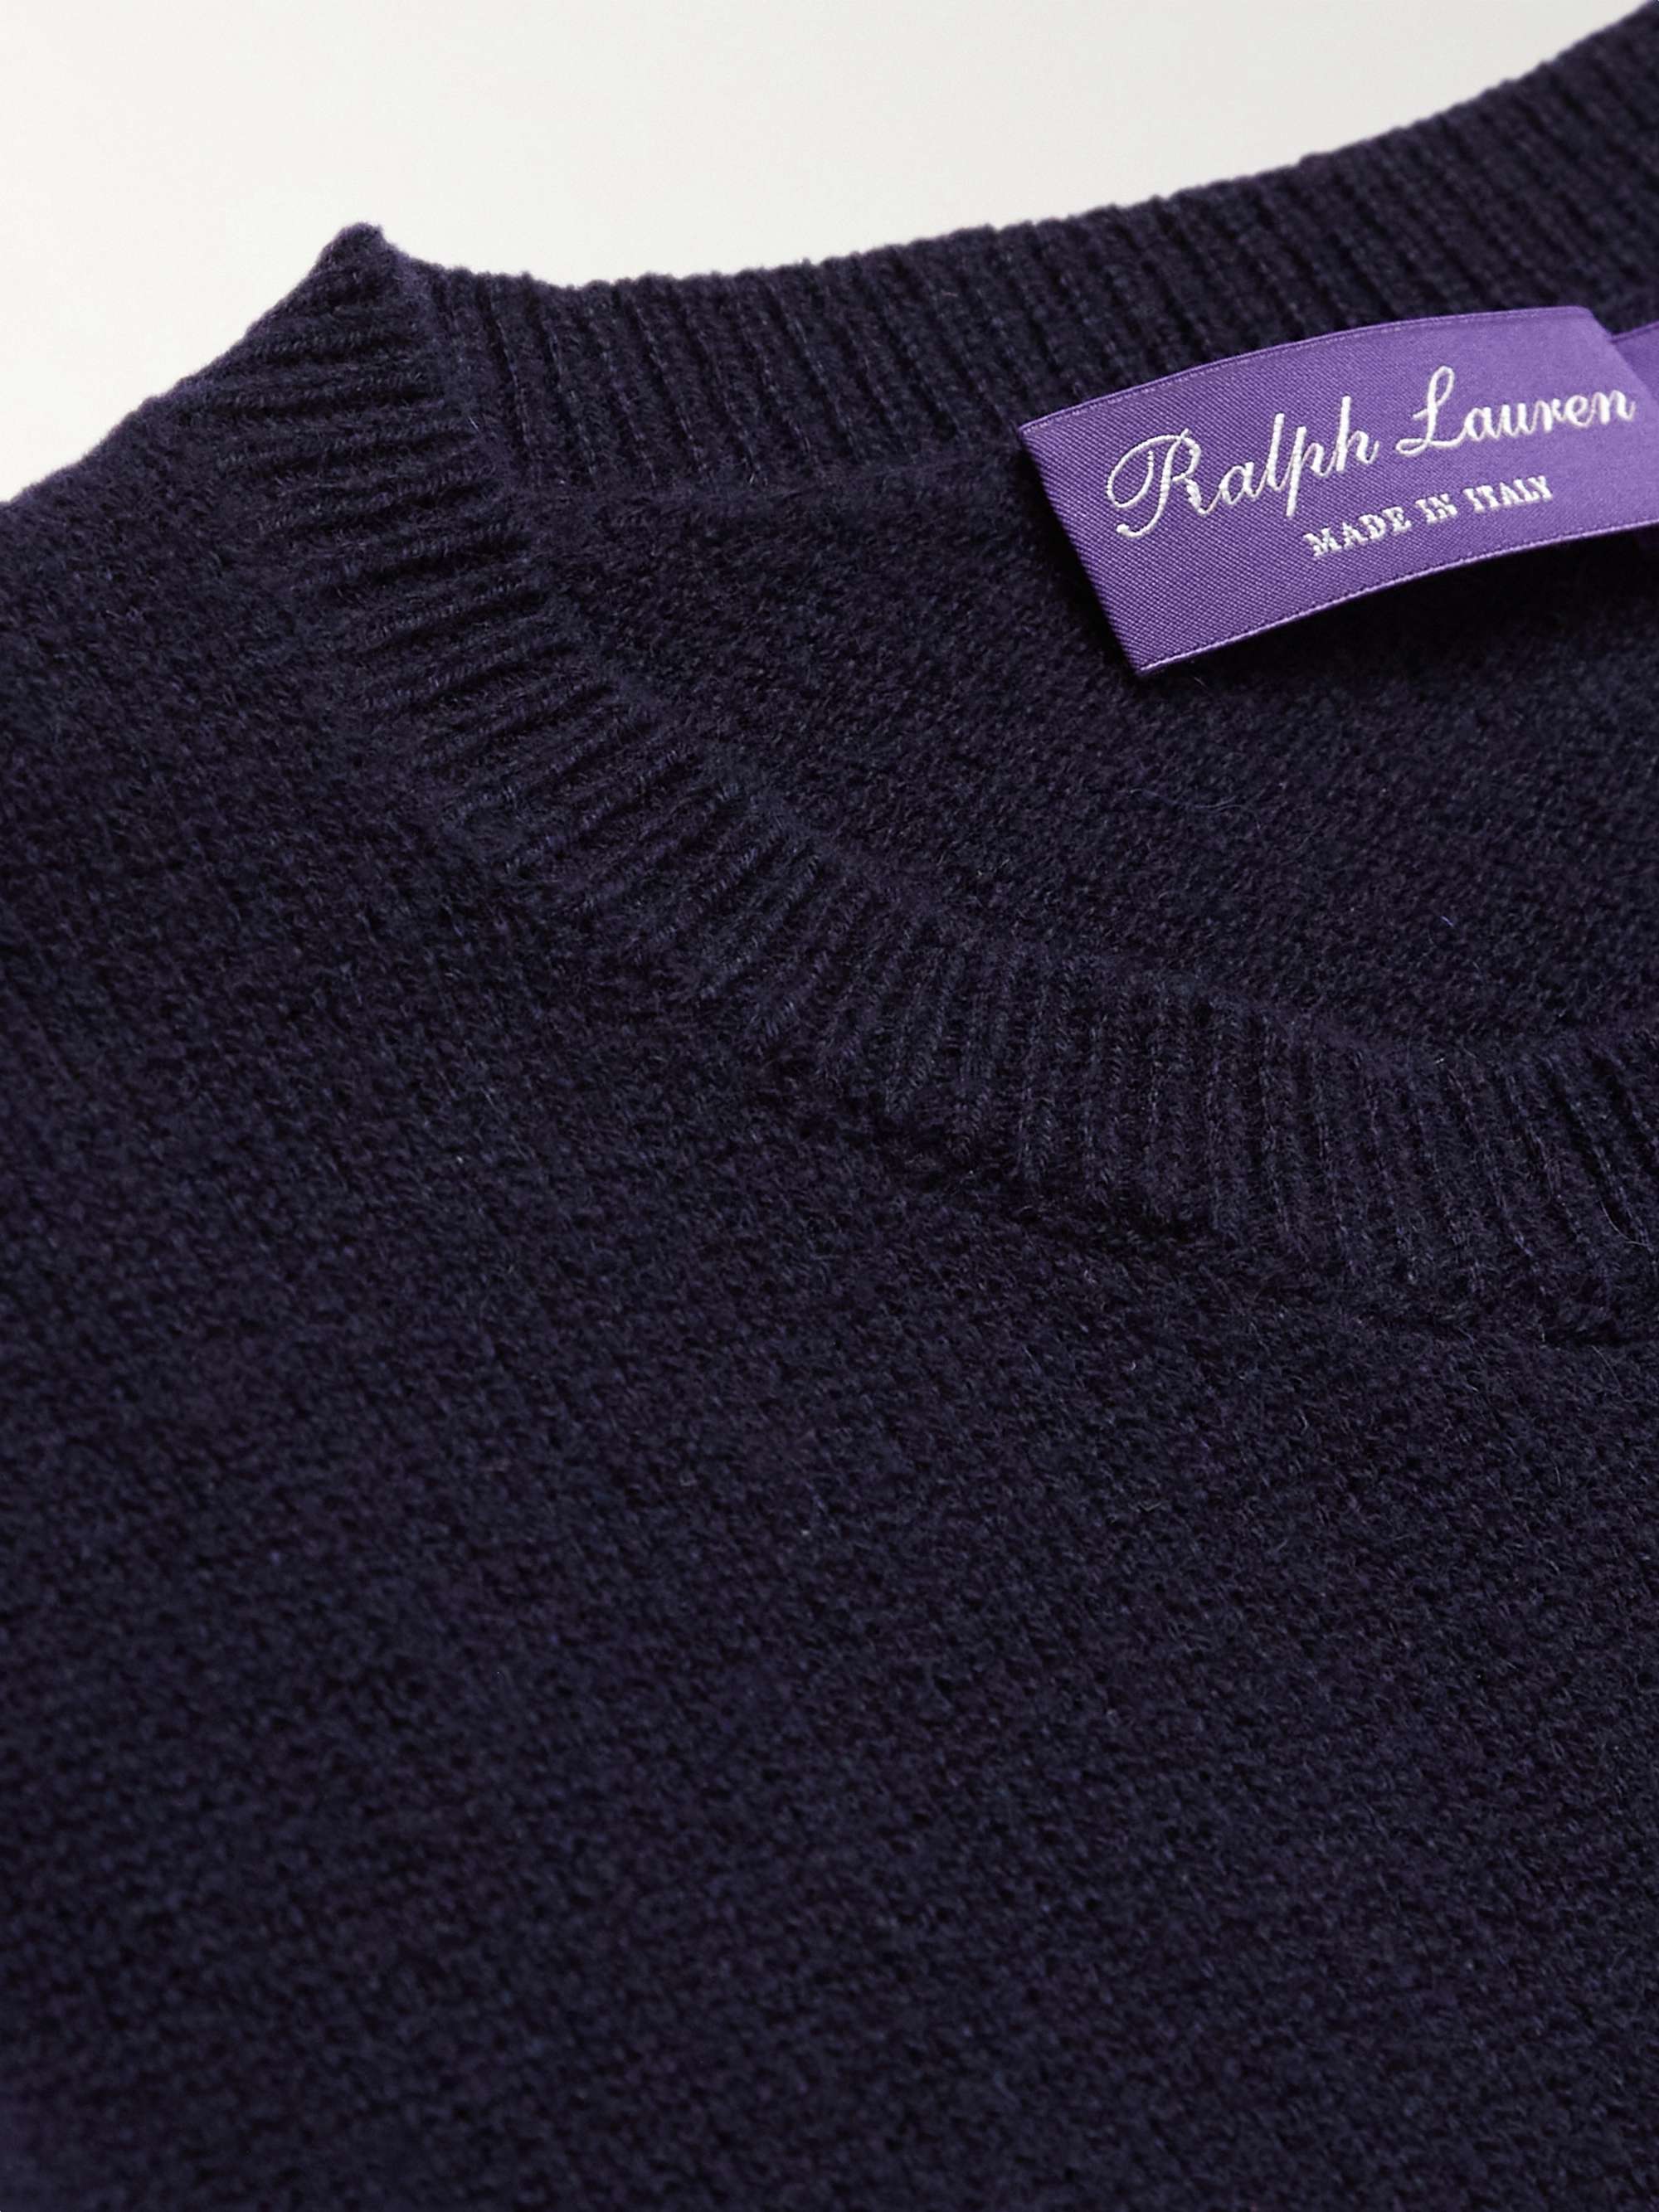 RALPH LAUREN PURPLE LABEL Embroidered Cashmere Sweater